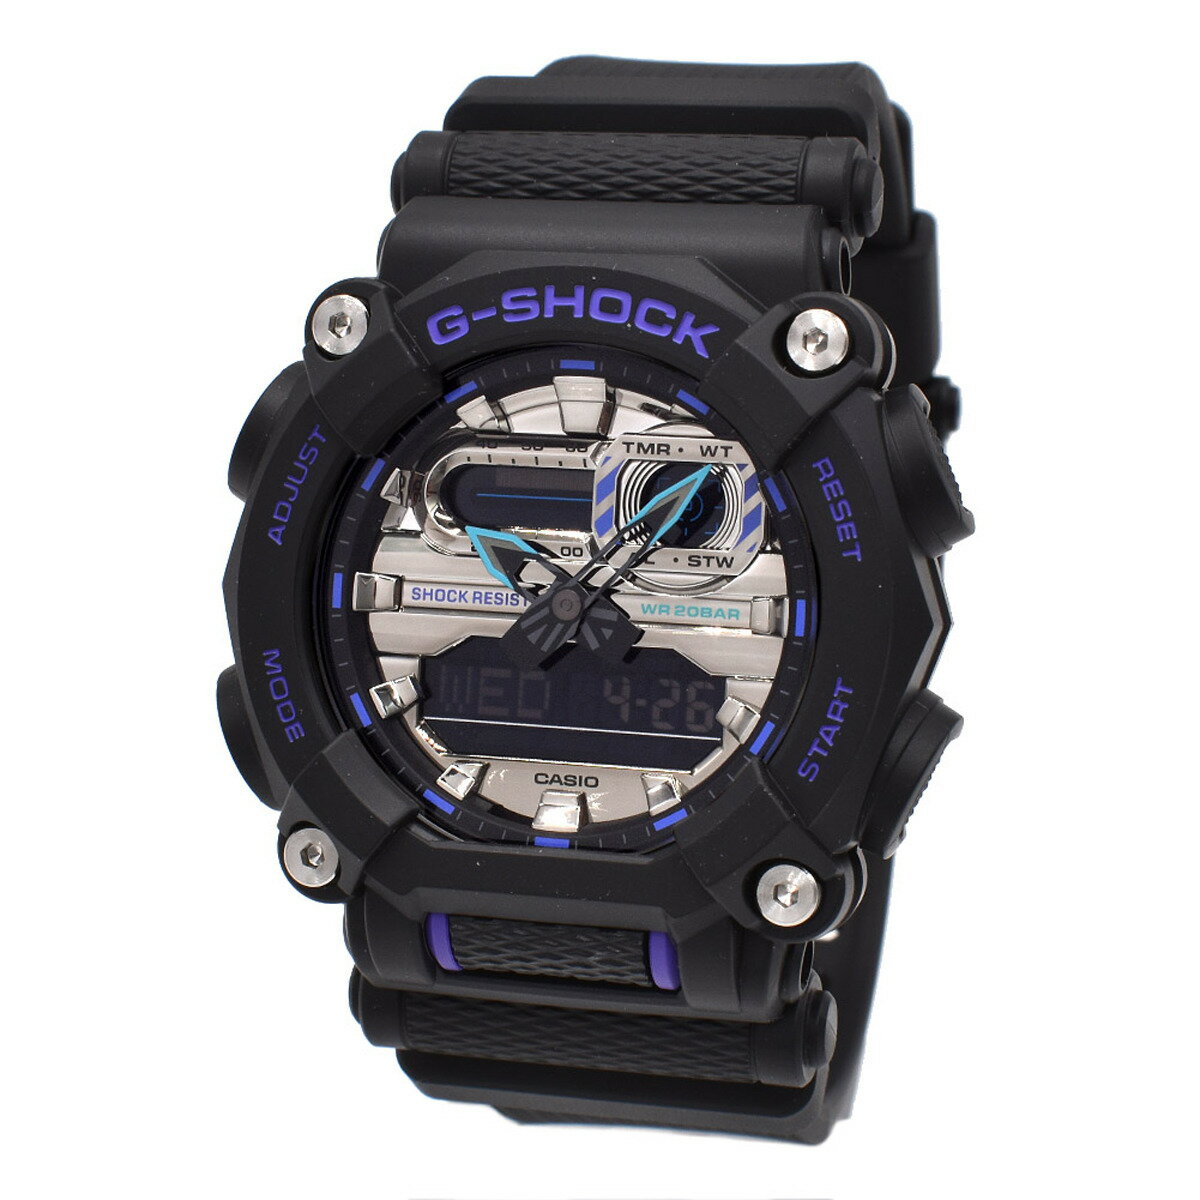 CASIO カシオ 腕時計 ウォッチ G-SHOCK Gショック GA900AS1ADR ANALOG-DIGITAL GA-900 GARISH Series アナログ デジタル アナデジ 時計 メンズ 海外正規品